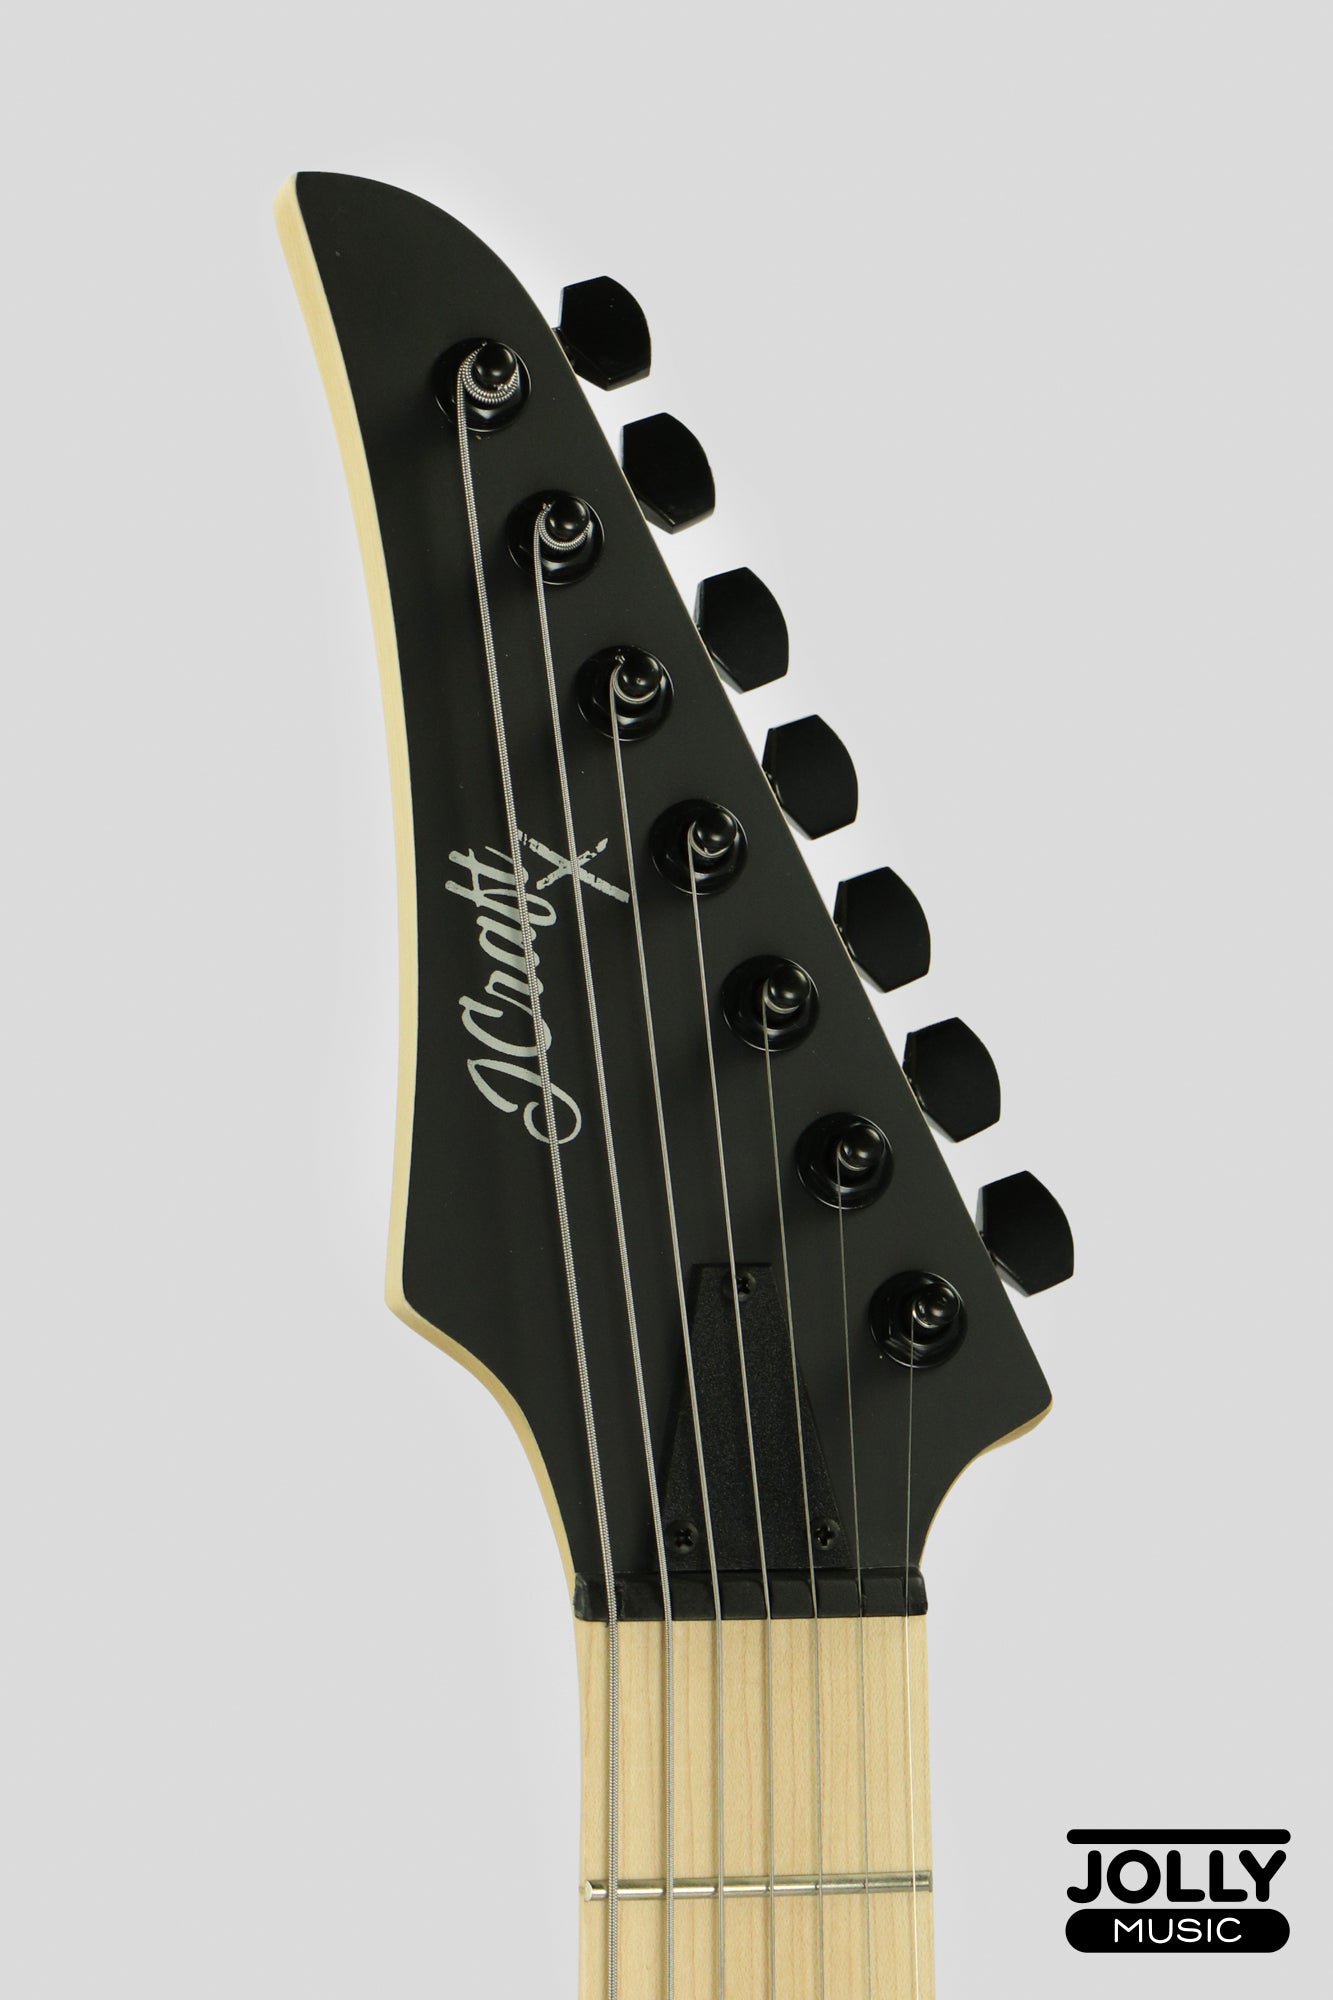 JCraft X Series Bushido BX7-1T 7-String Super S-Style Electric Guitar - Satin Black